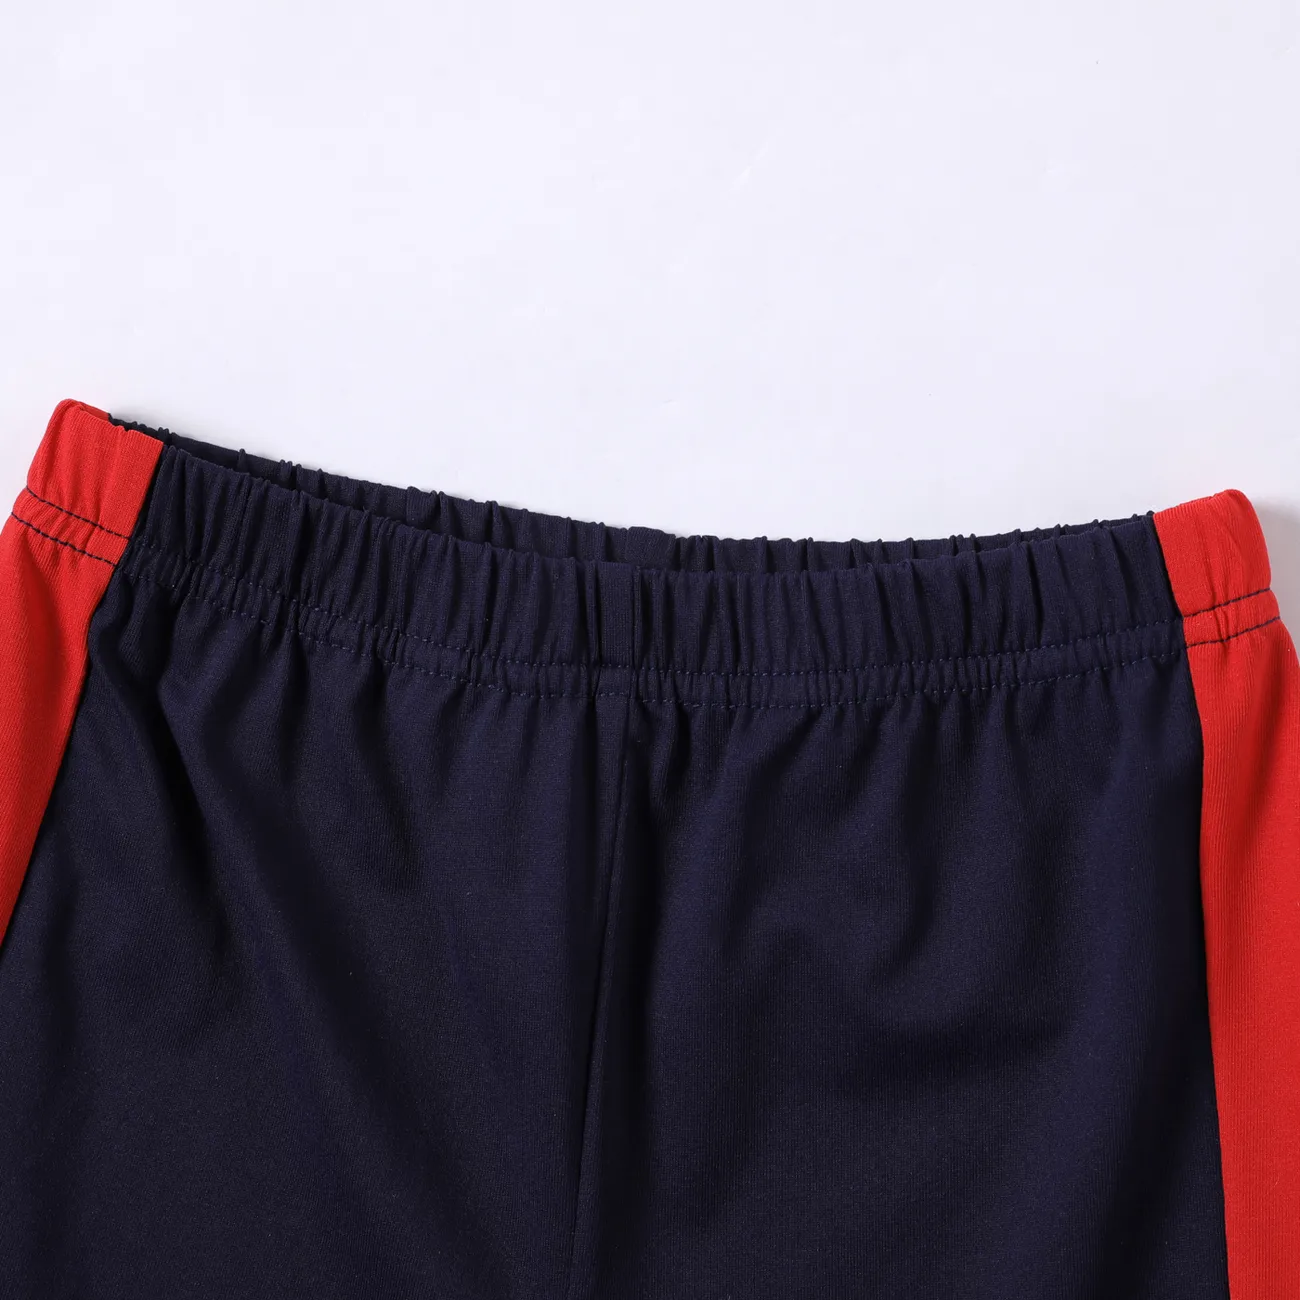 2-piece Kid Boy Basketball/Football Print Short-sleeve Tee and Elasticized Shorts Set Red big image 1